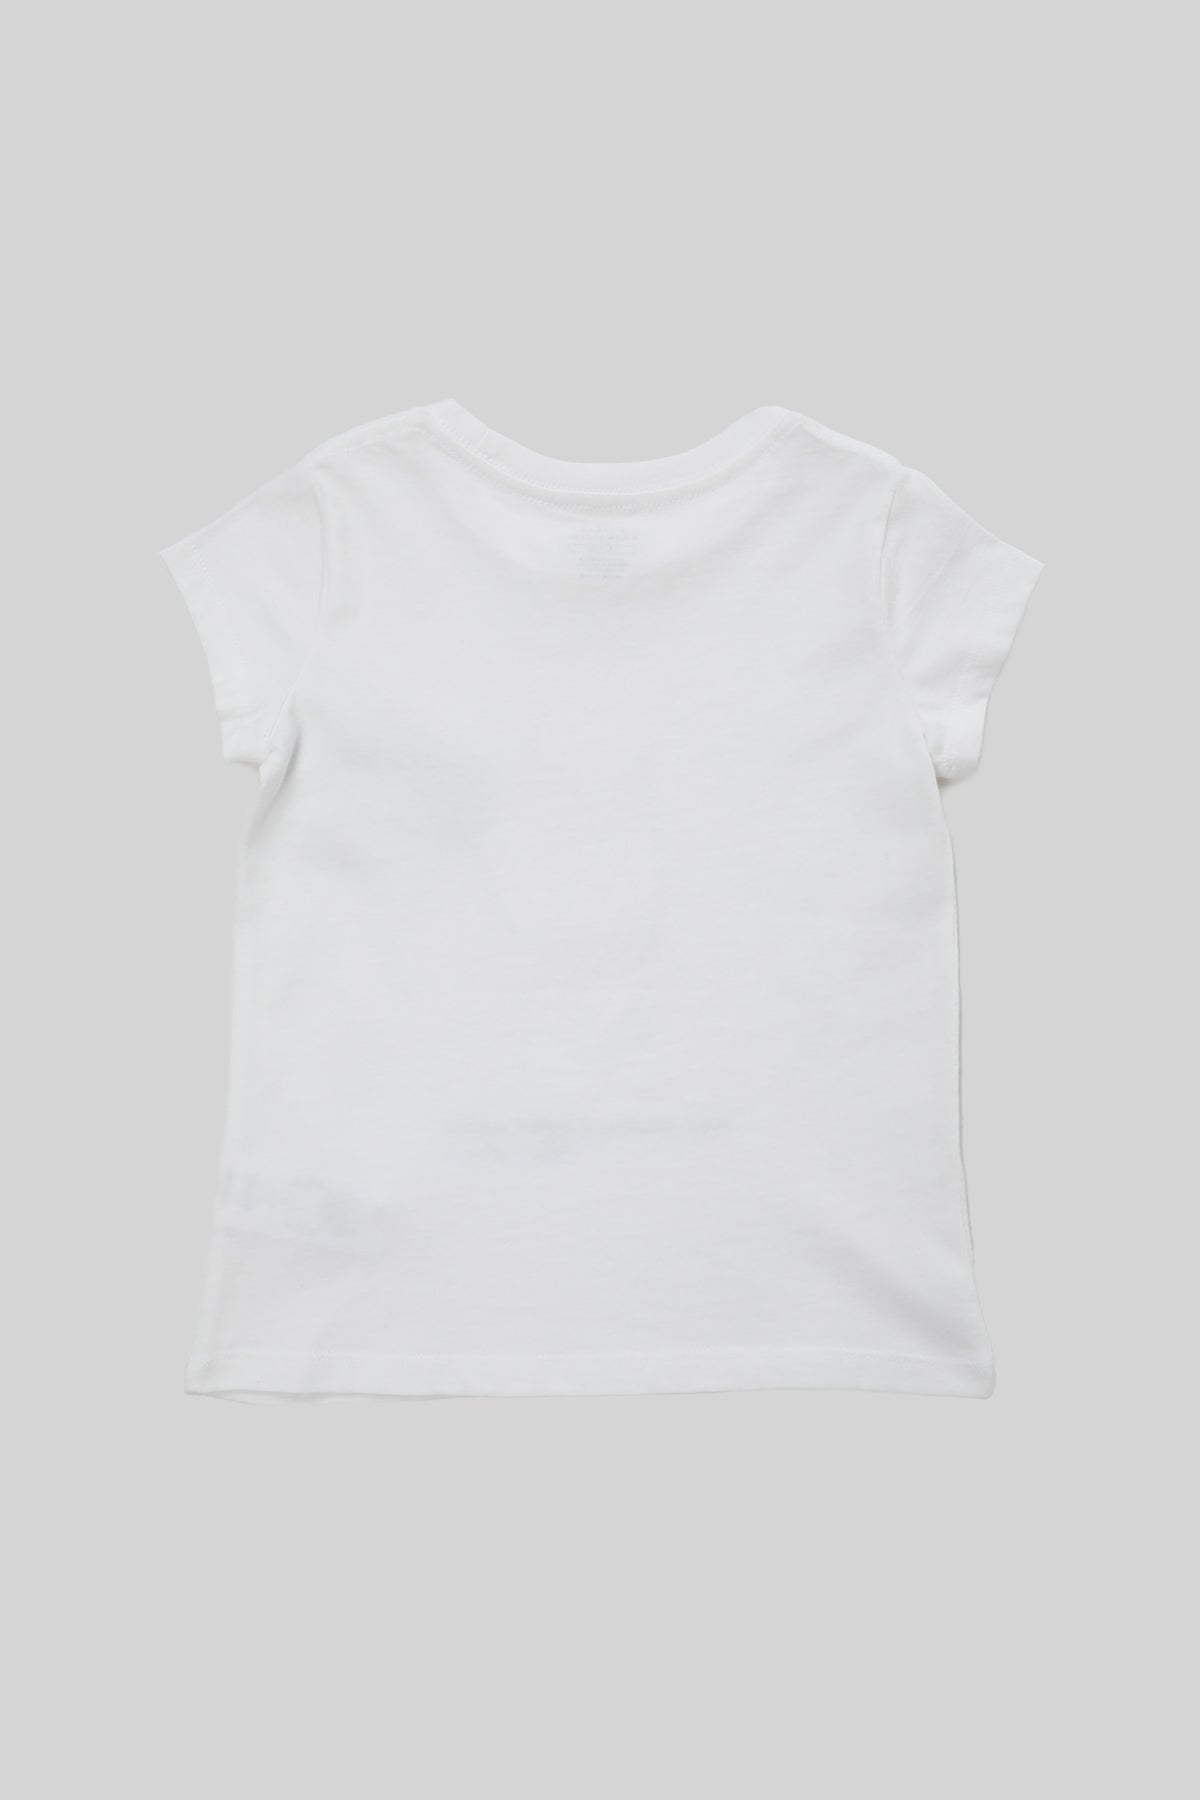 Polo Ralph Lauren 5-6.5 Yaş Kız Çocuk Polo Bear T-shirt-Libas Trendy Fashion Store